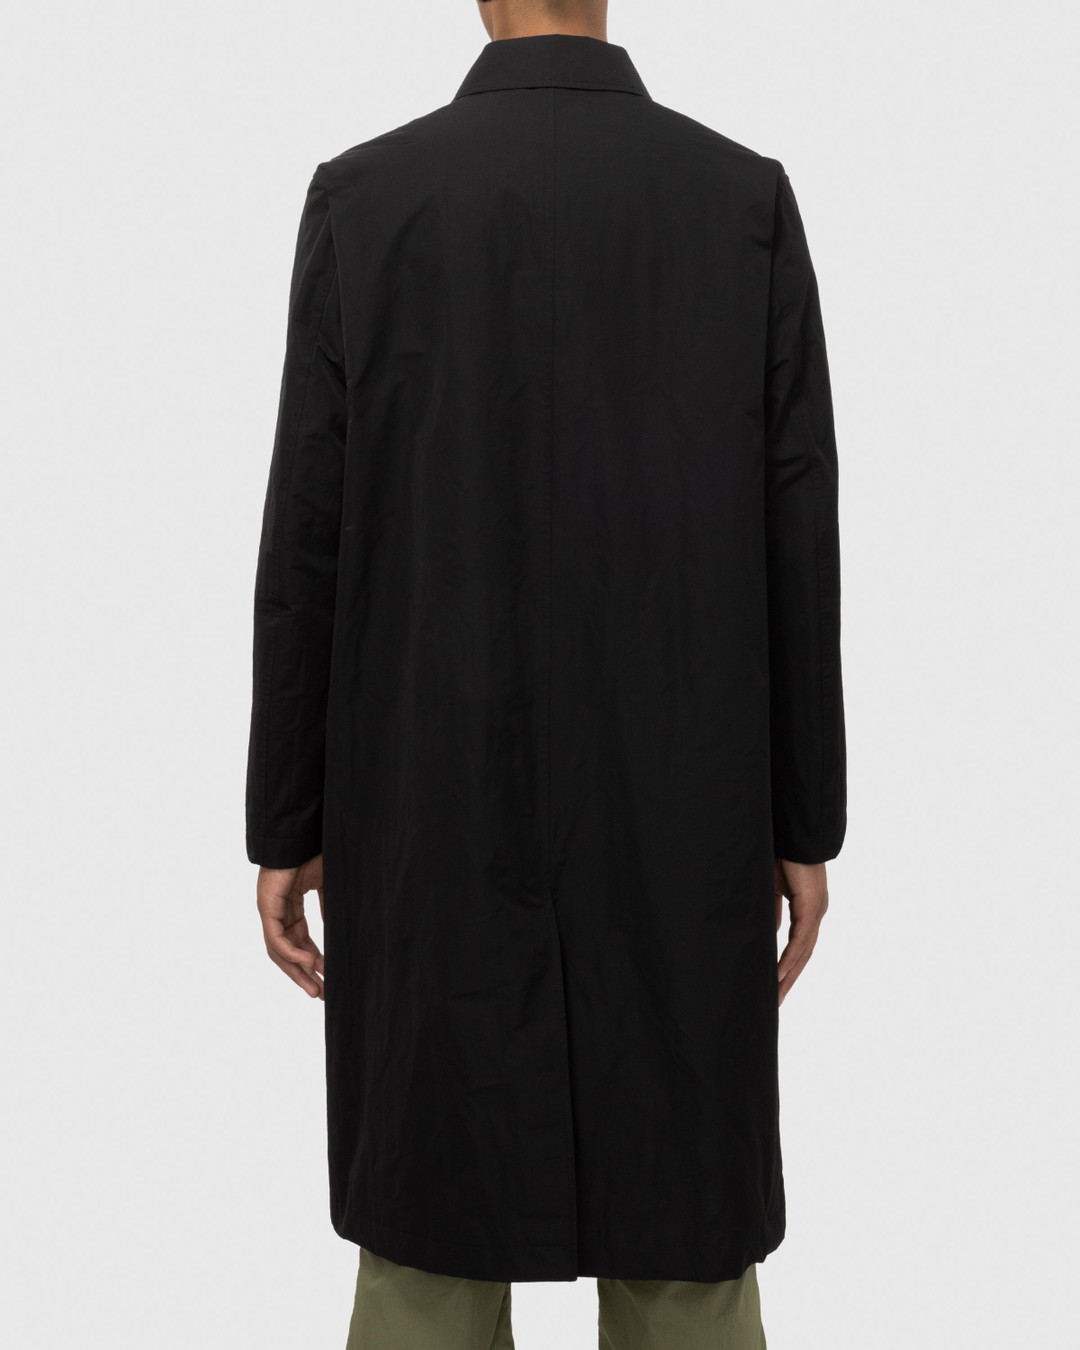 Dries van Noten – Rankle Coat Black - Outerwear - Black - Image 3